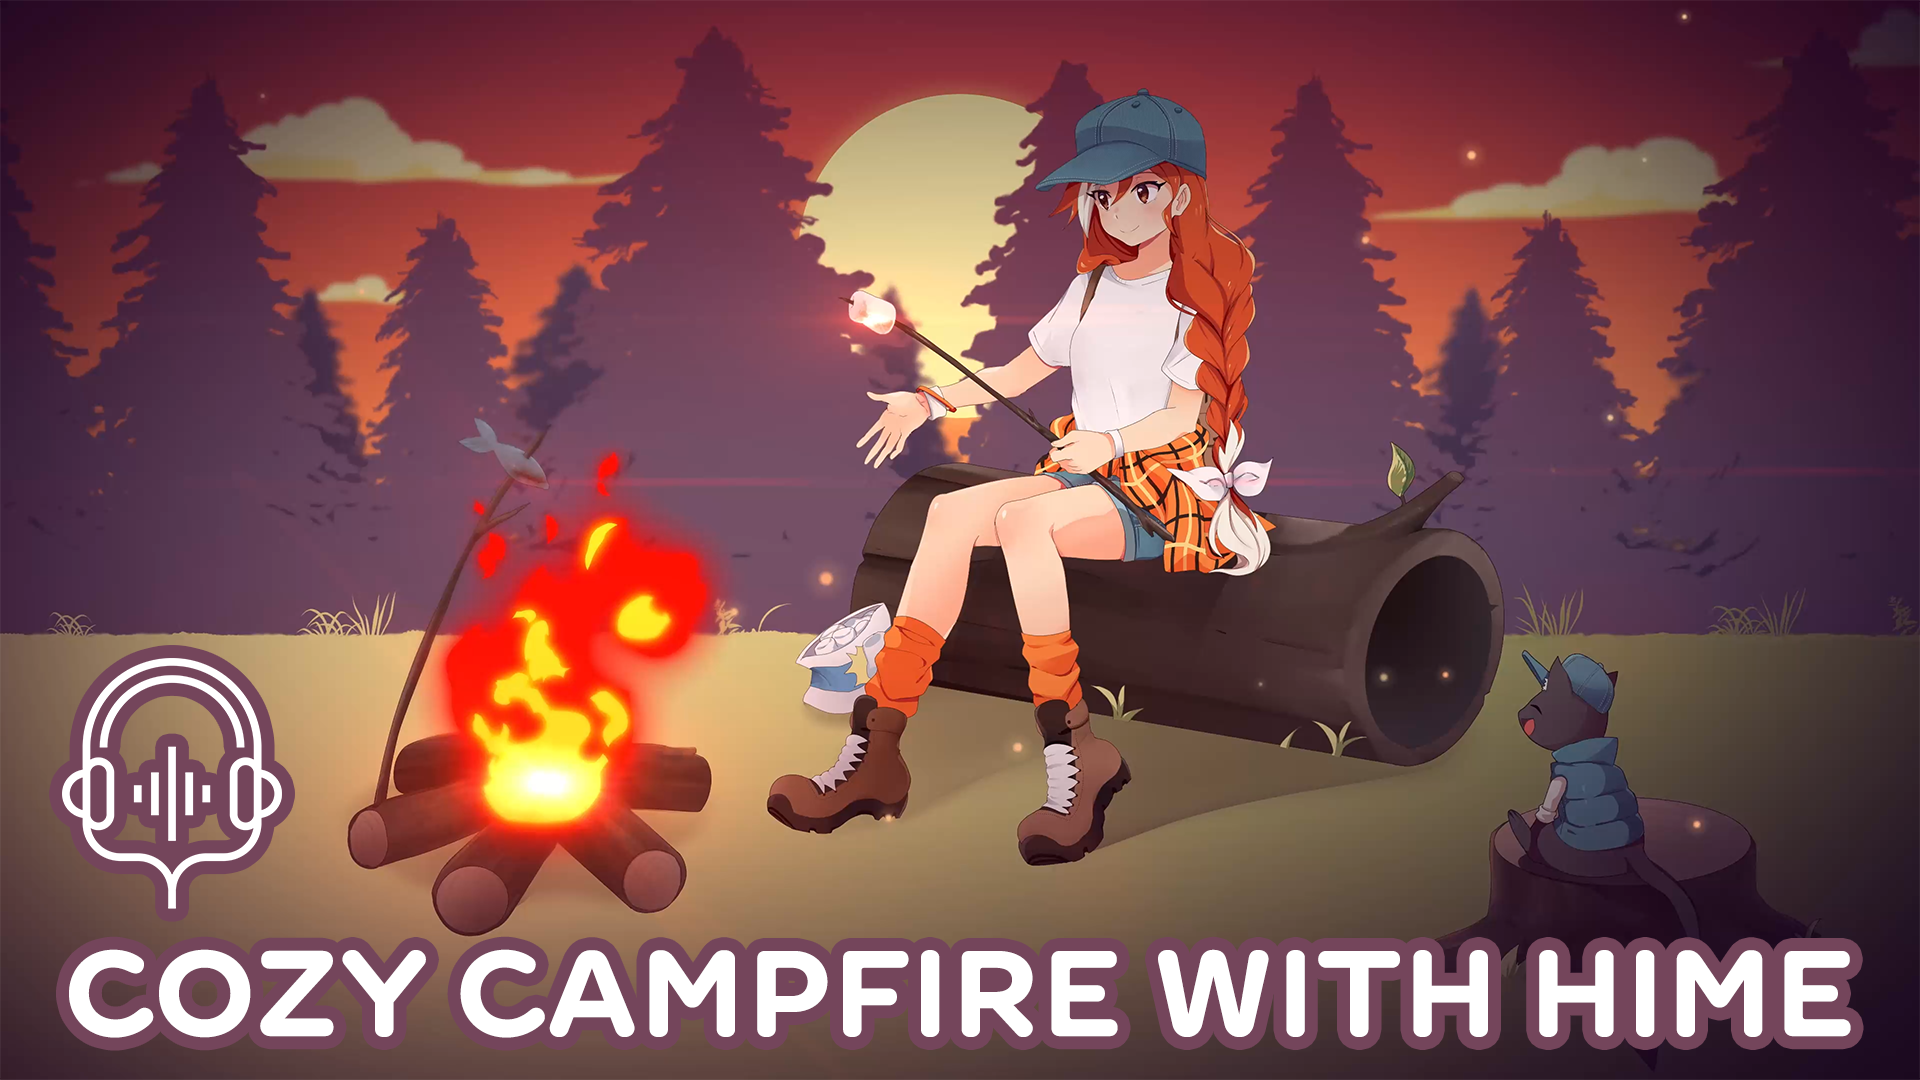 Hime's cozy campfire